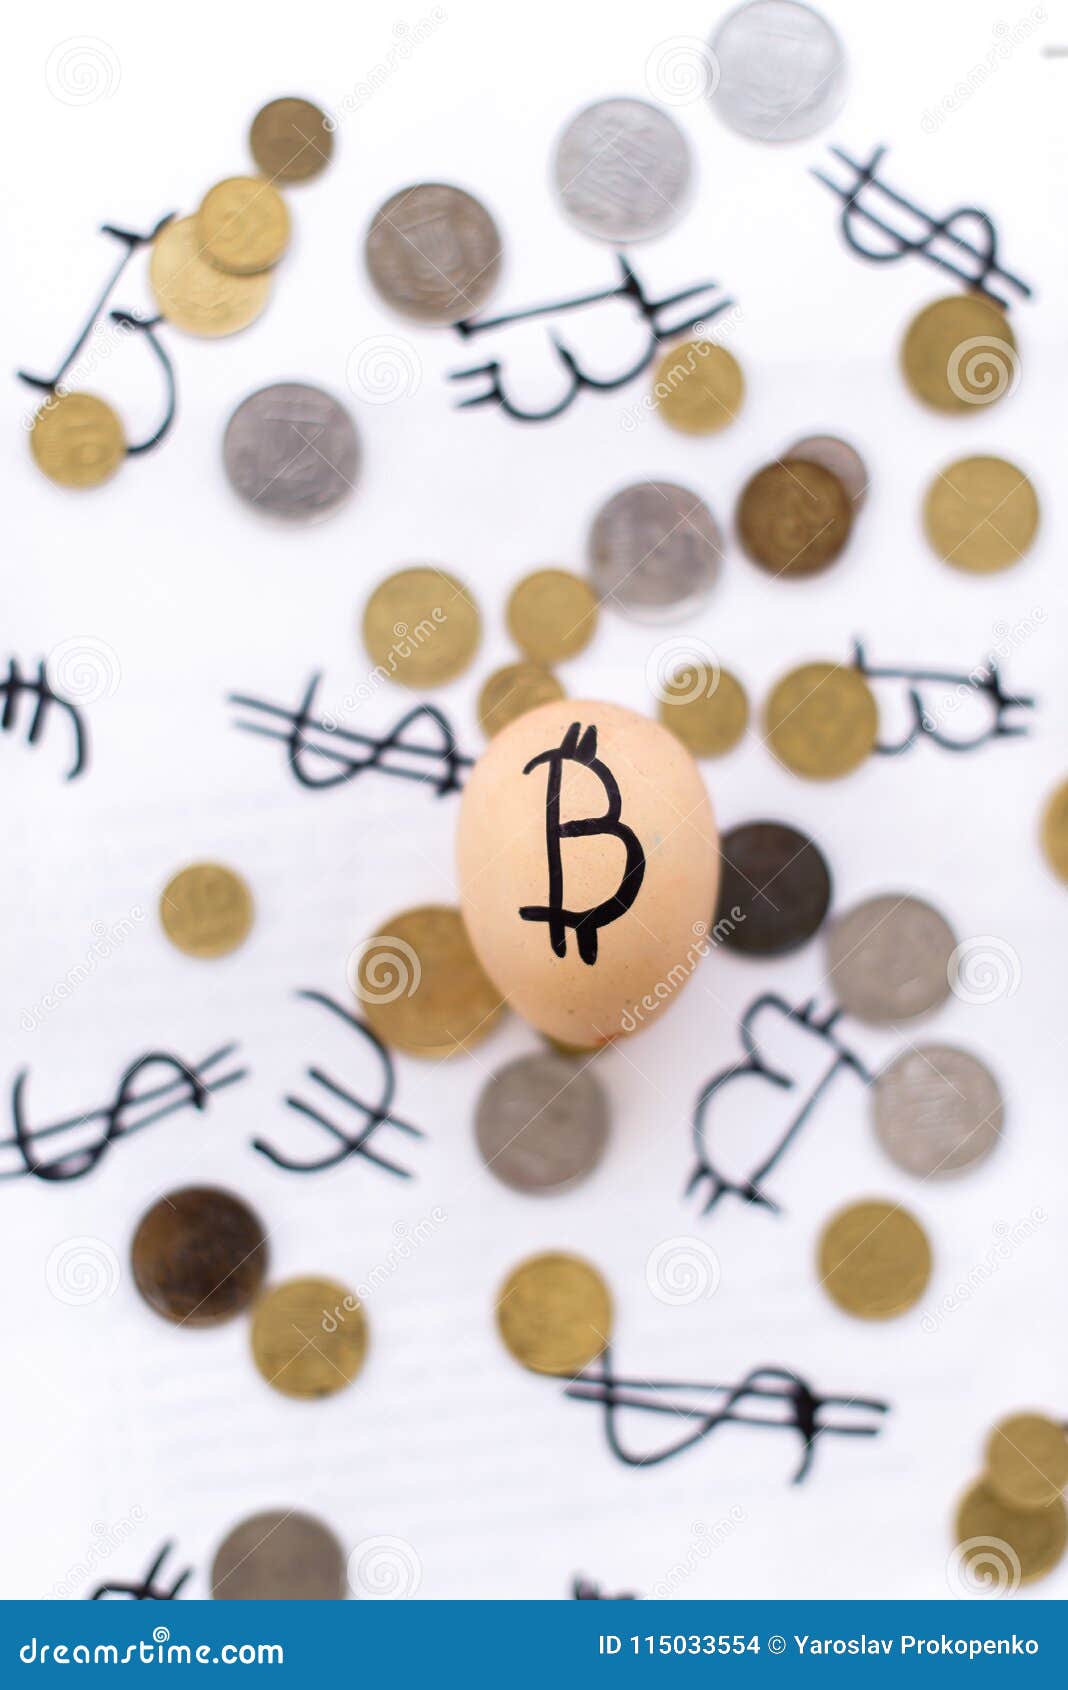 egg price crypto